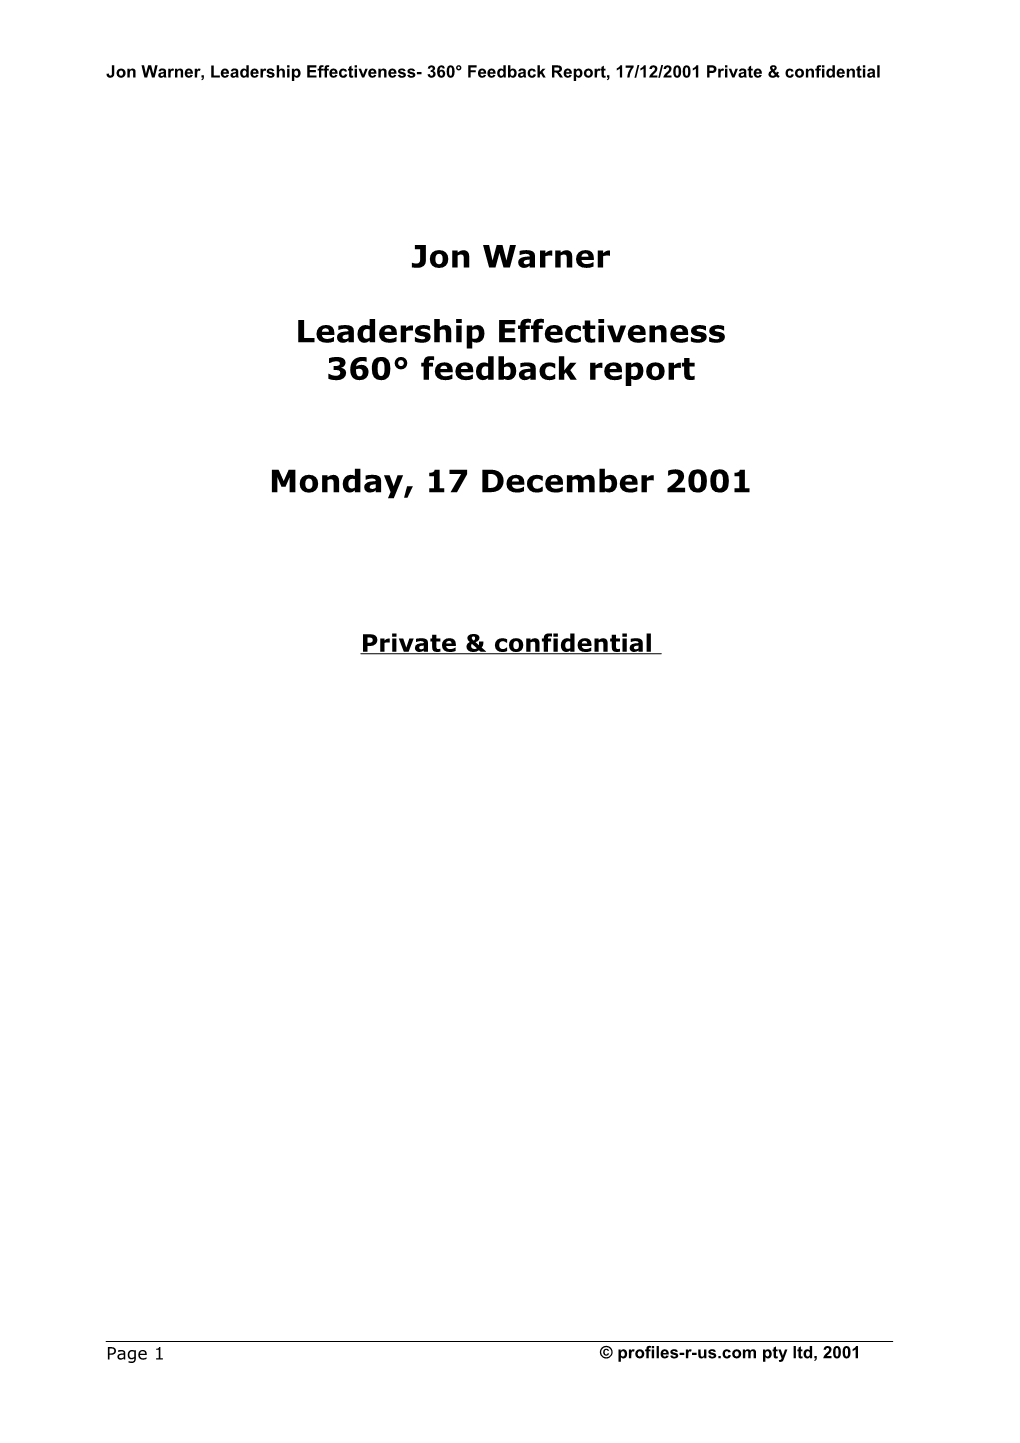 Jon Warner, Leadership Effectiveness- 360 Feedback Report, 17/12/2001 Private & Confidential